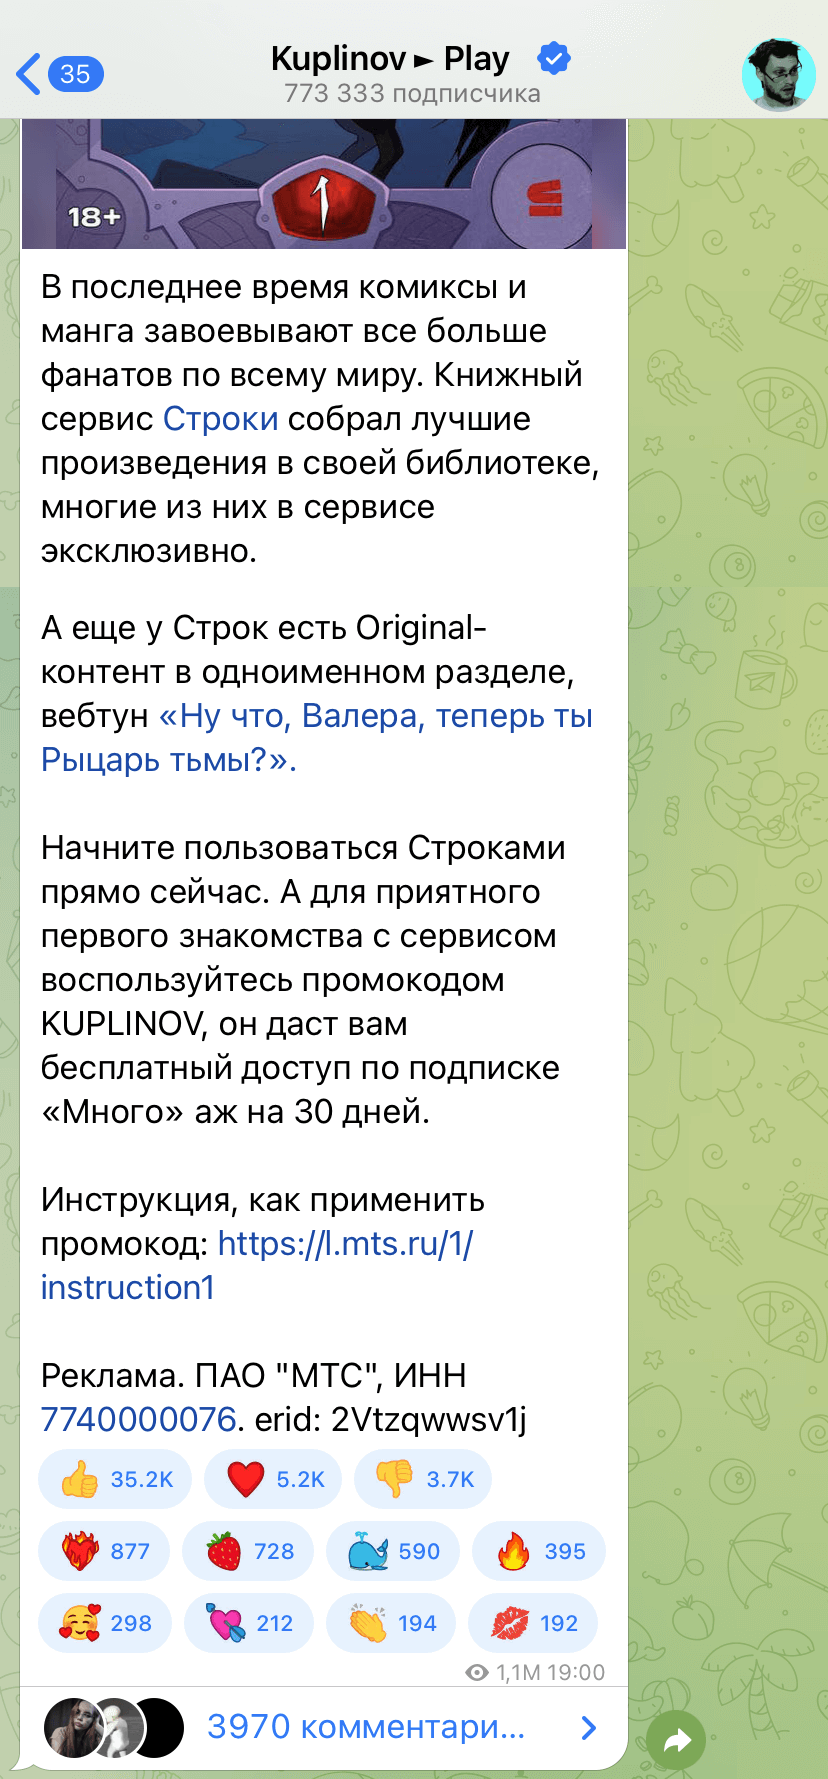 Реклама сервиса «Строки» в телеграм-канале KuplinovPlay